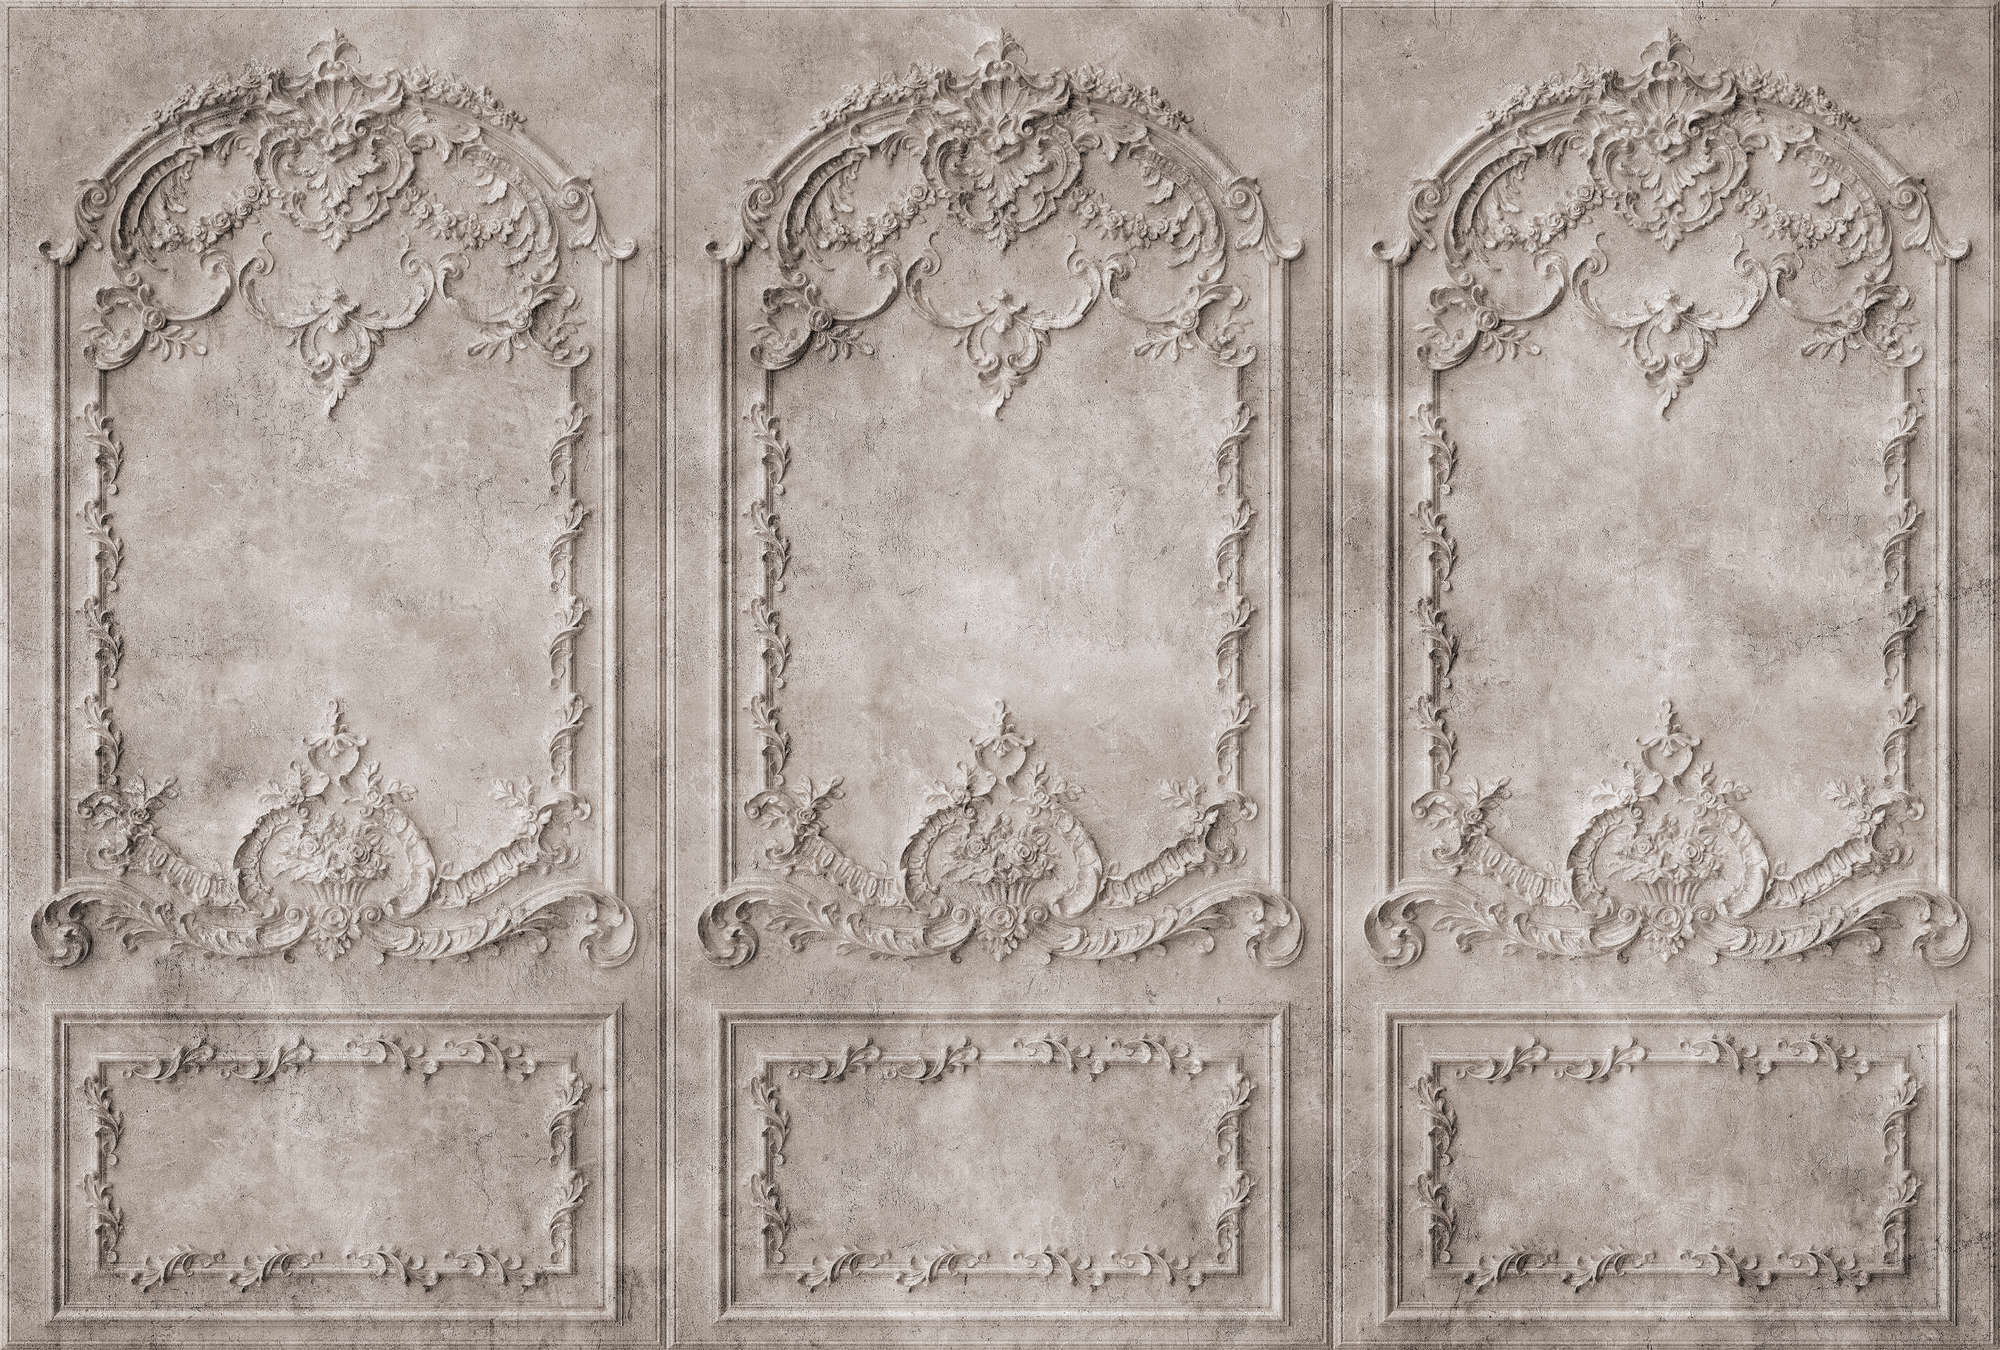             Versailles 1 – Fototapete Grau-Braun Holz-Paneele im Barock Stil
        